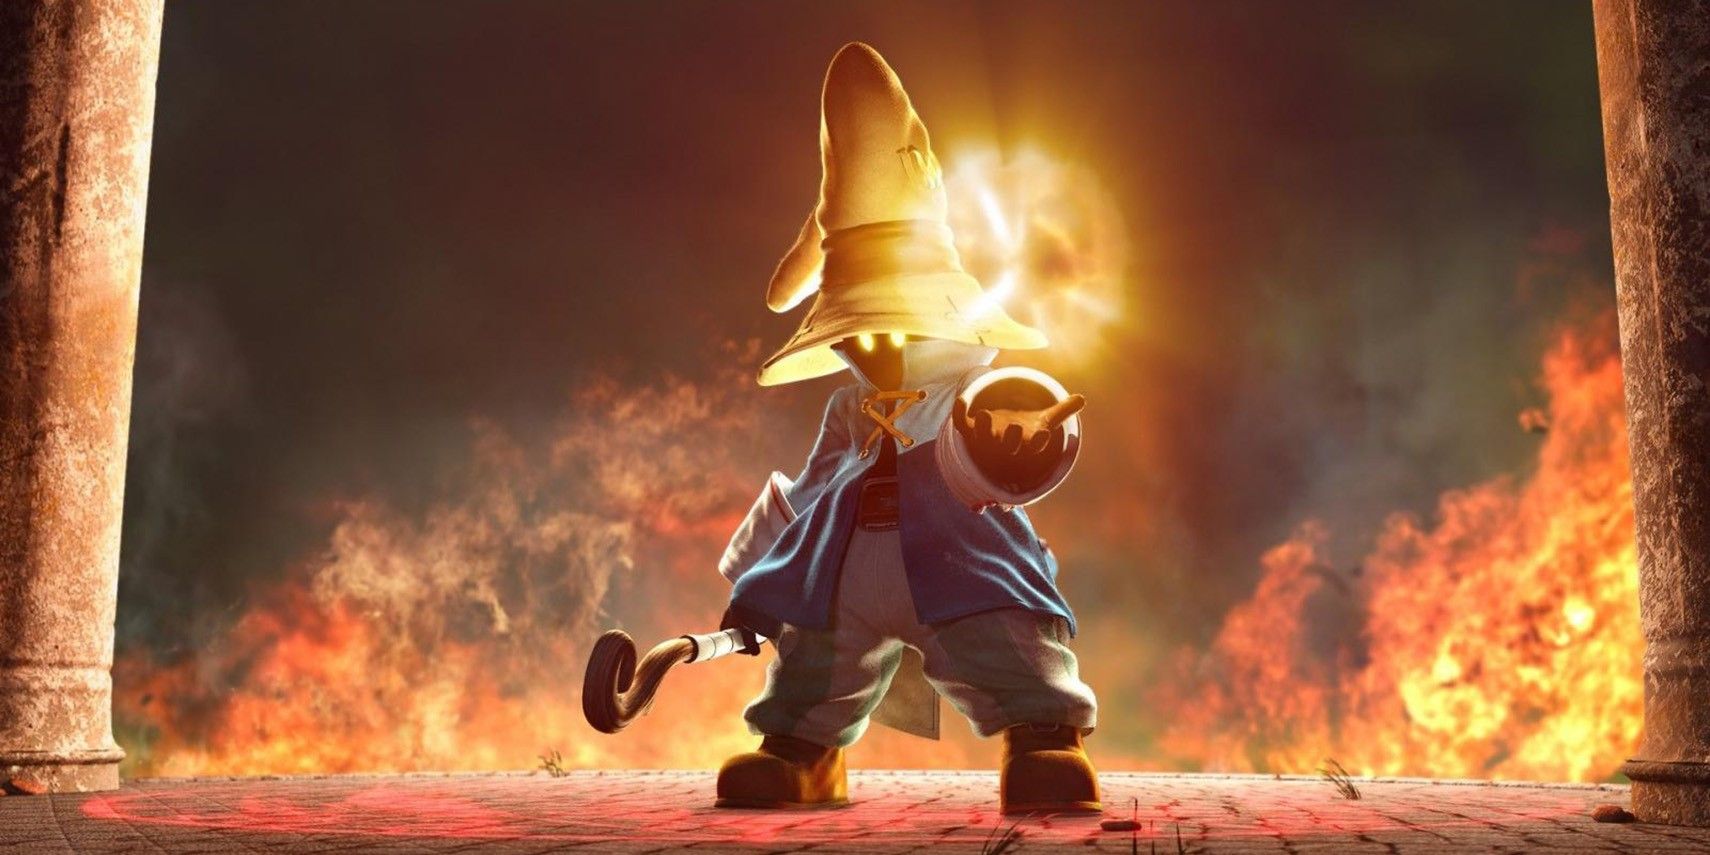 Vivi Ornitier from Final Fantasy 9 casting a fire spell